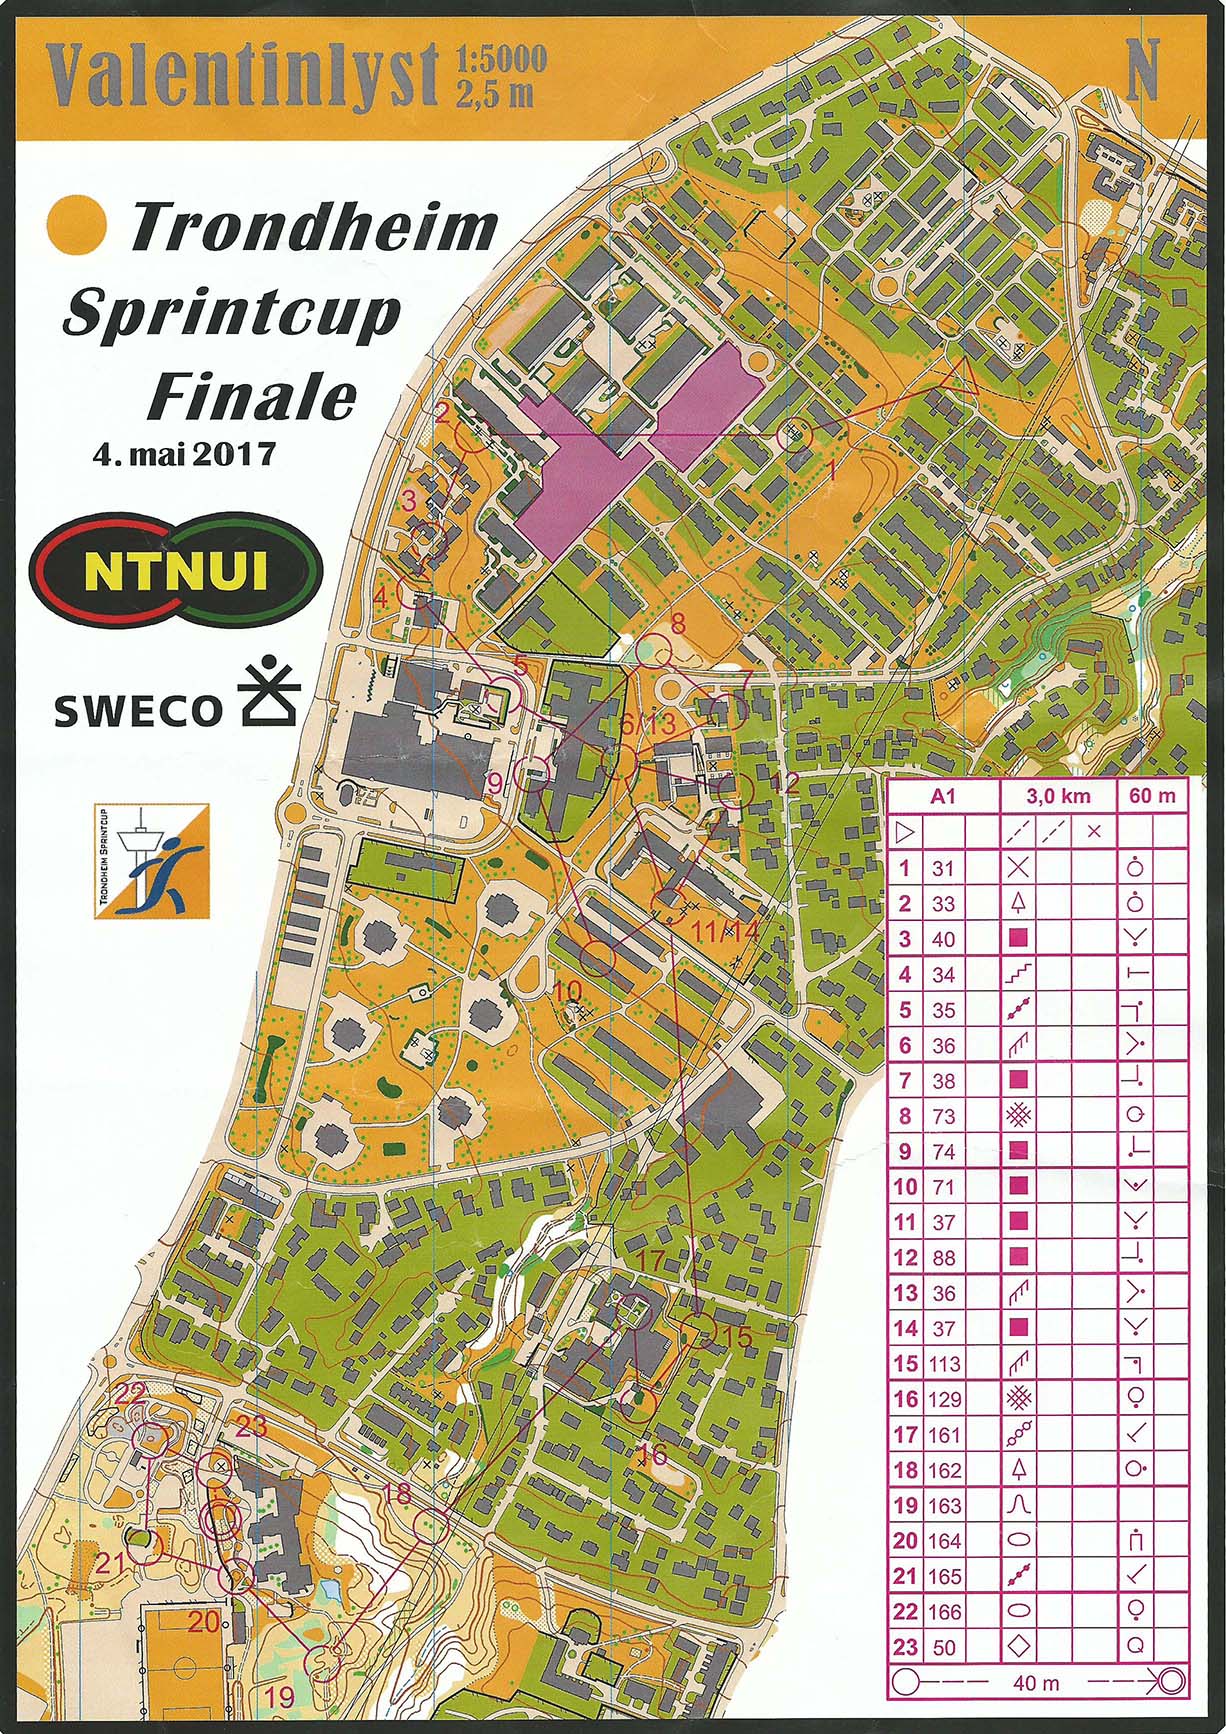 Trondheim Sprintcup Final (04.05.2017)